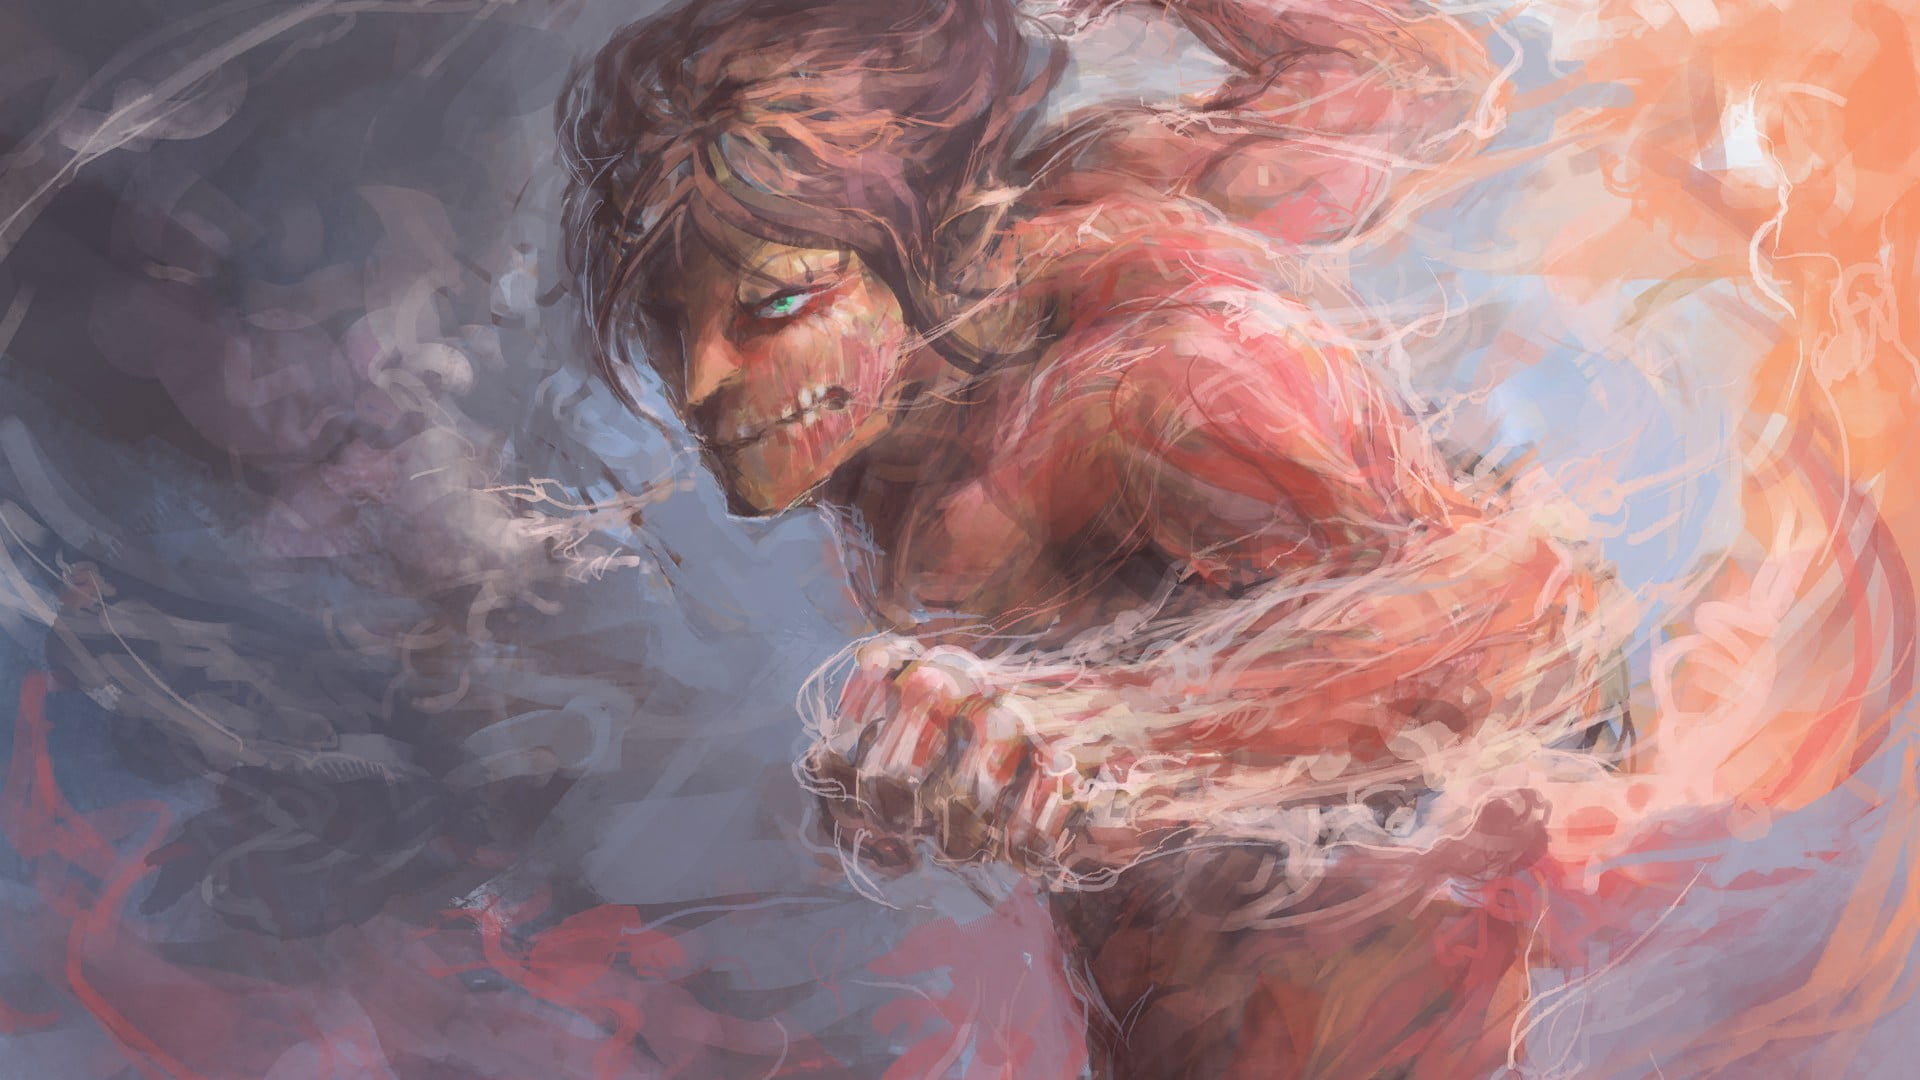 Attack on Titan Eren titan form wallpaper, Shingeki no Kyojin